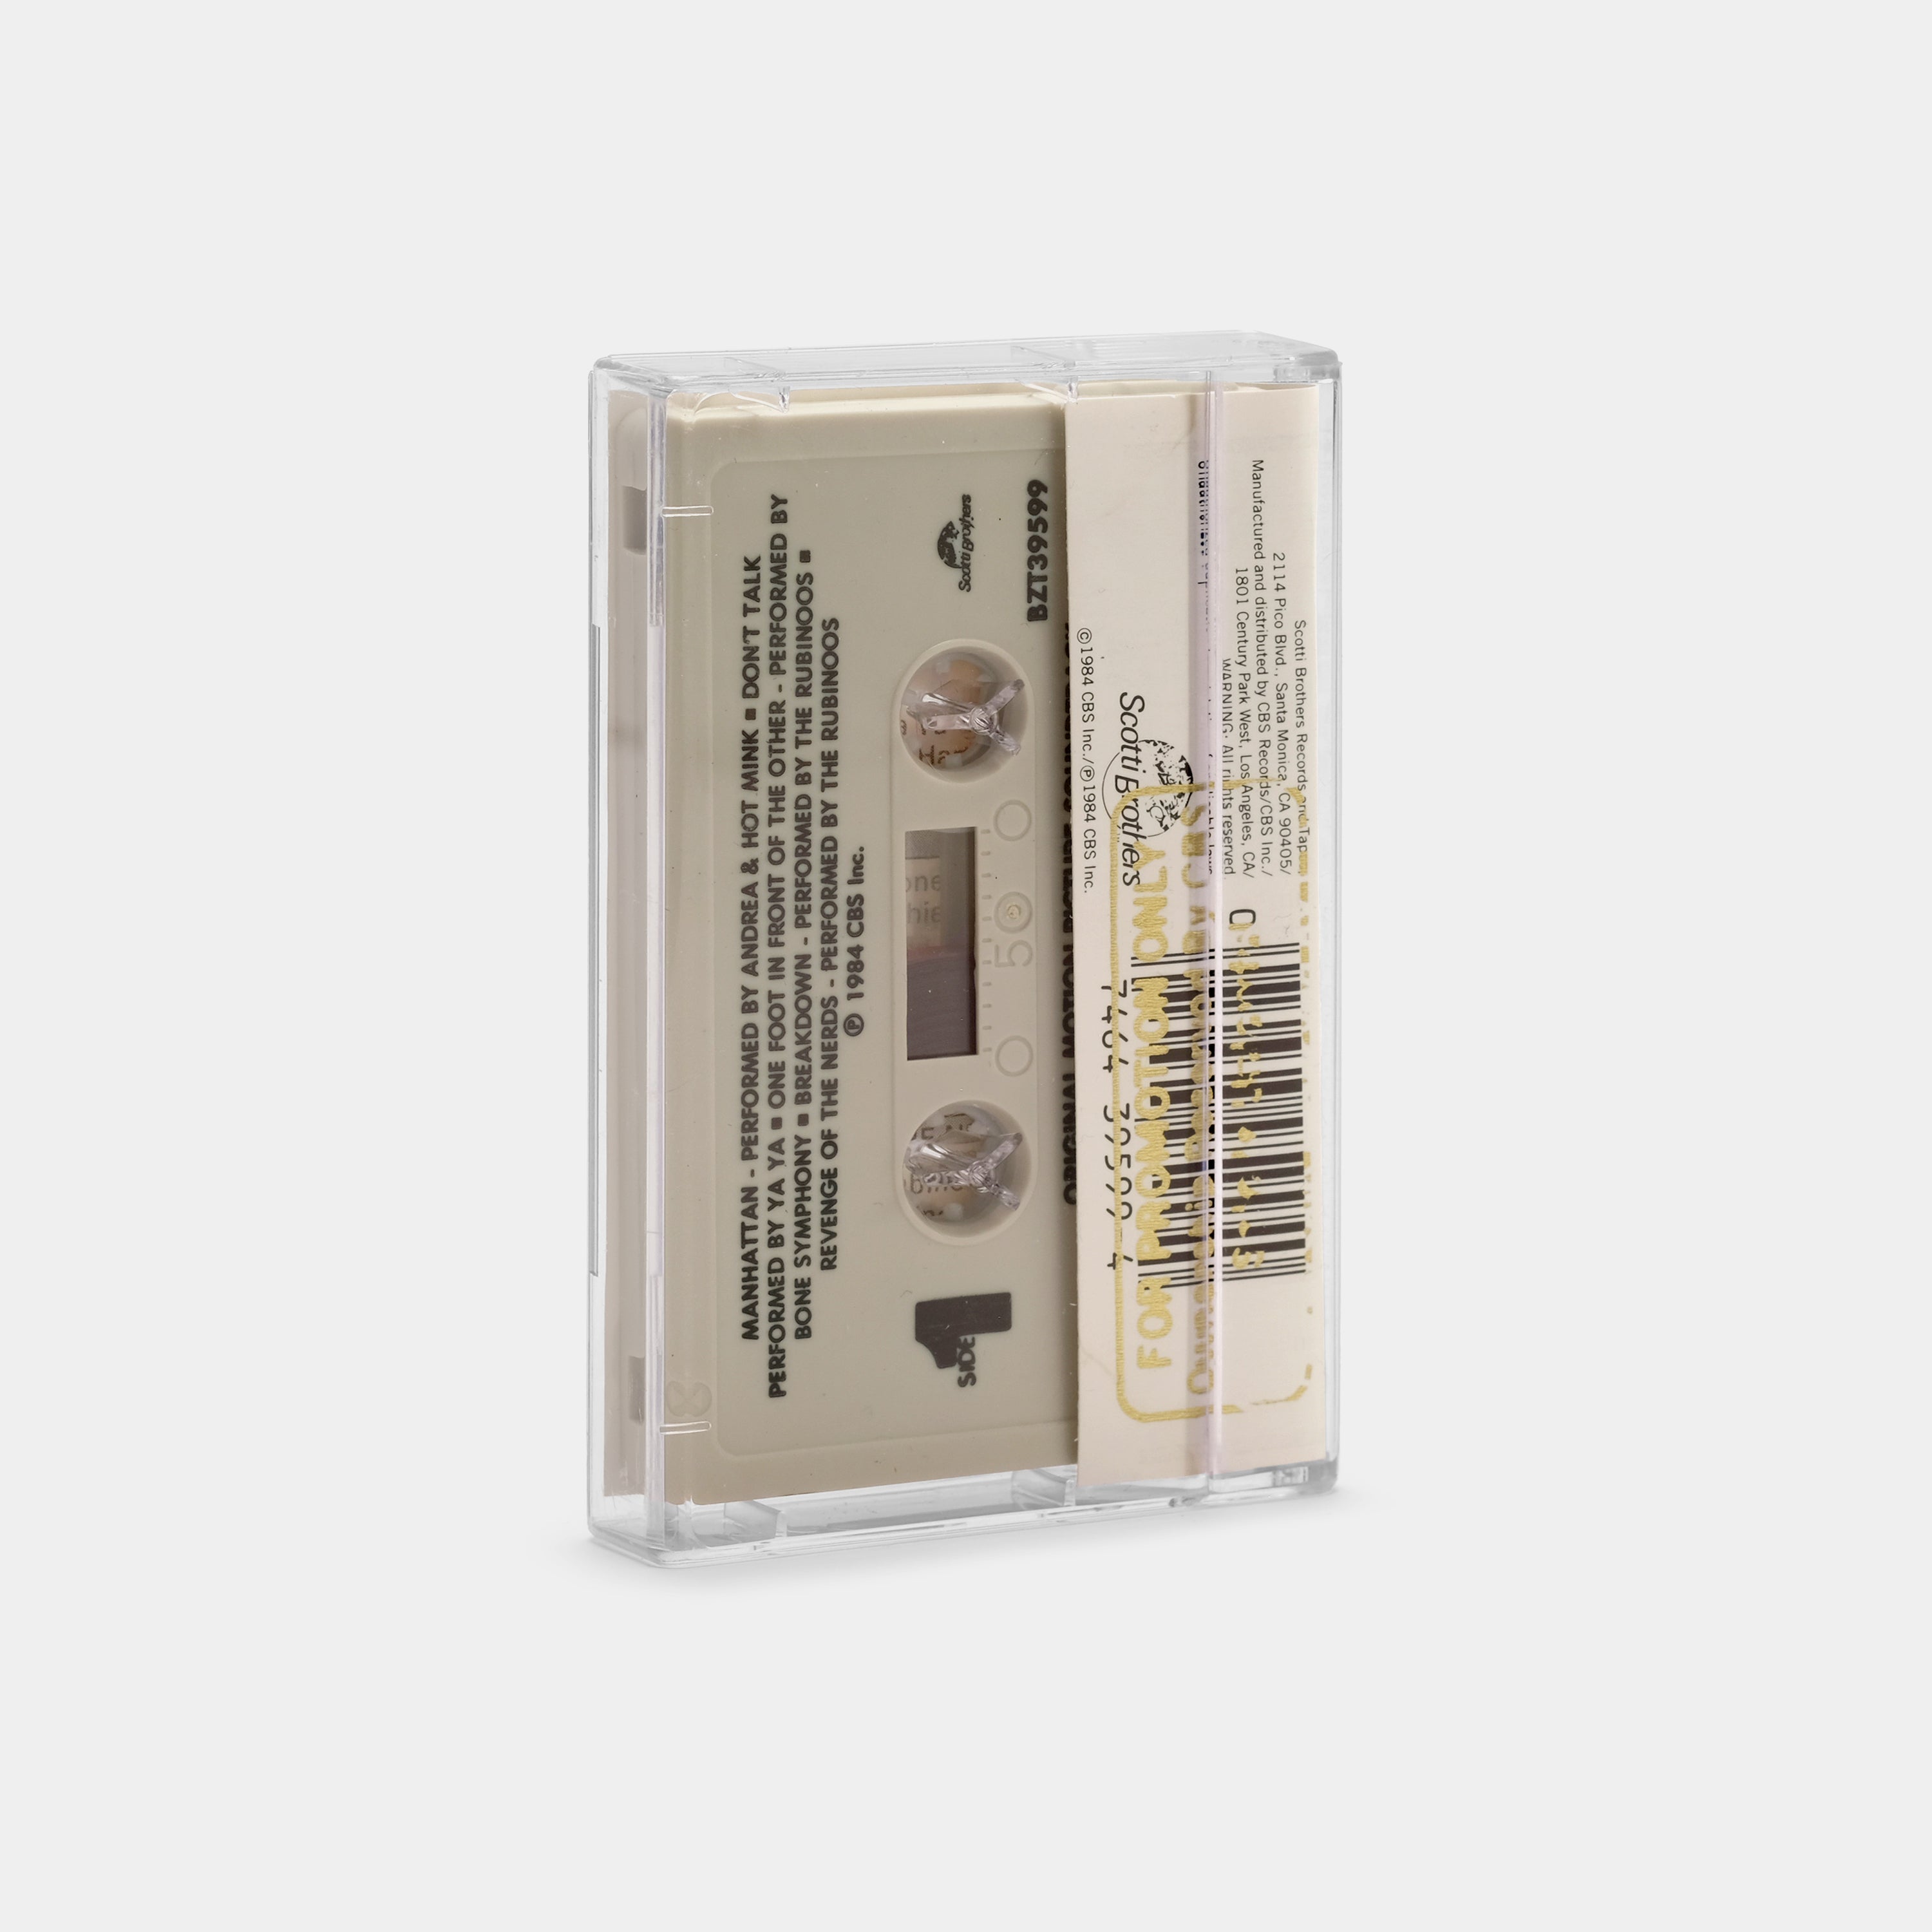 Revenge of the Nerds (Original Motion Picture Soundtrack) Cassette Tape